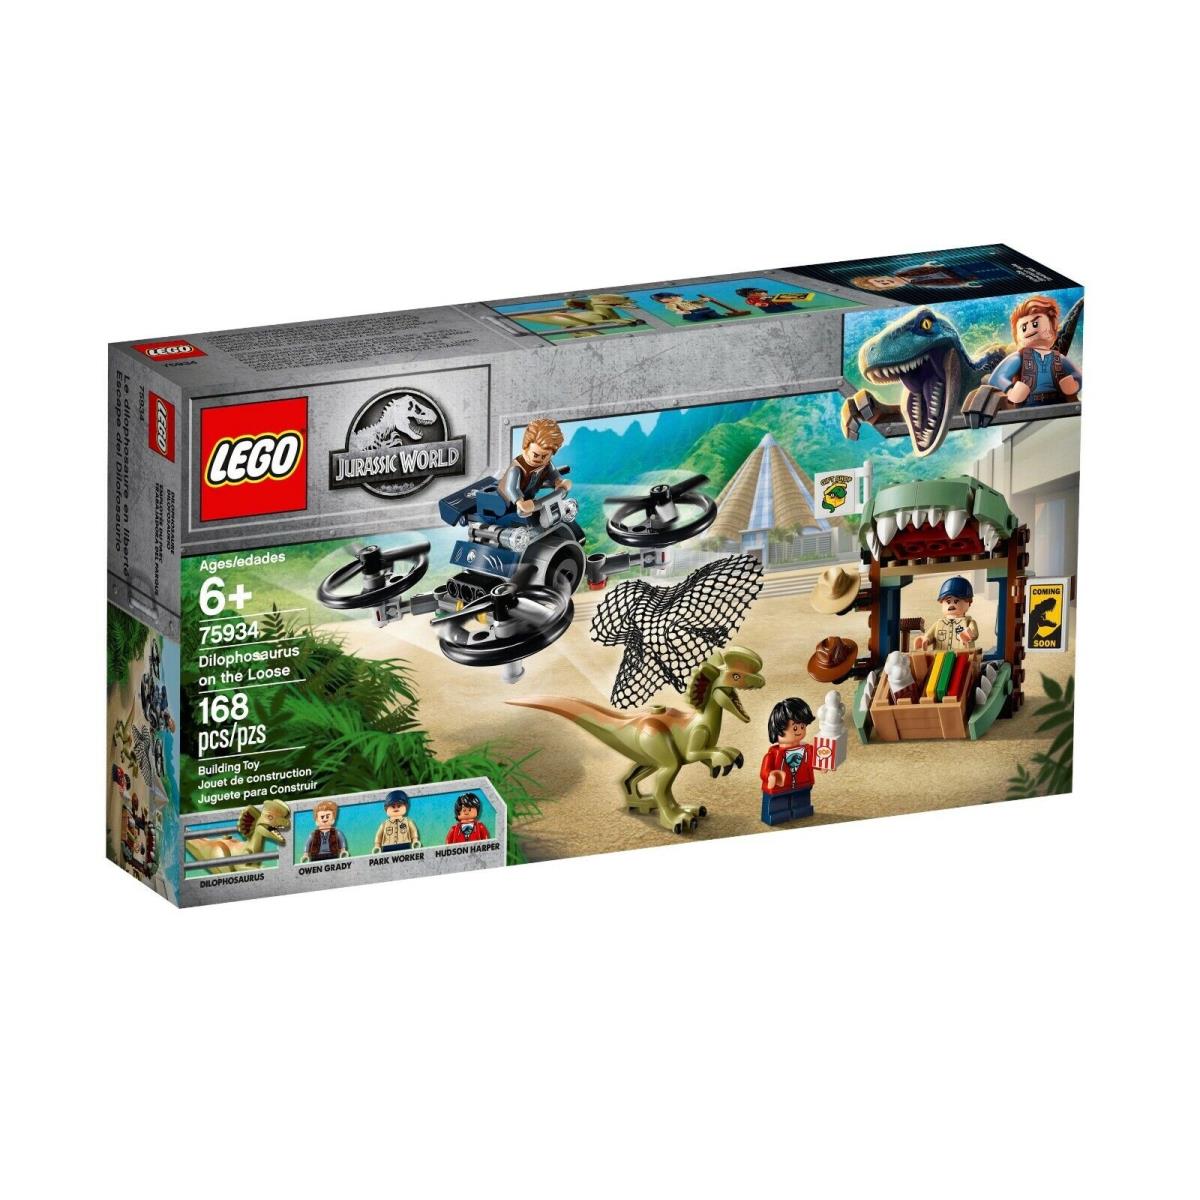 Lego Set 75934 Jurassic World Dilophosaurus on The Loose